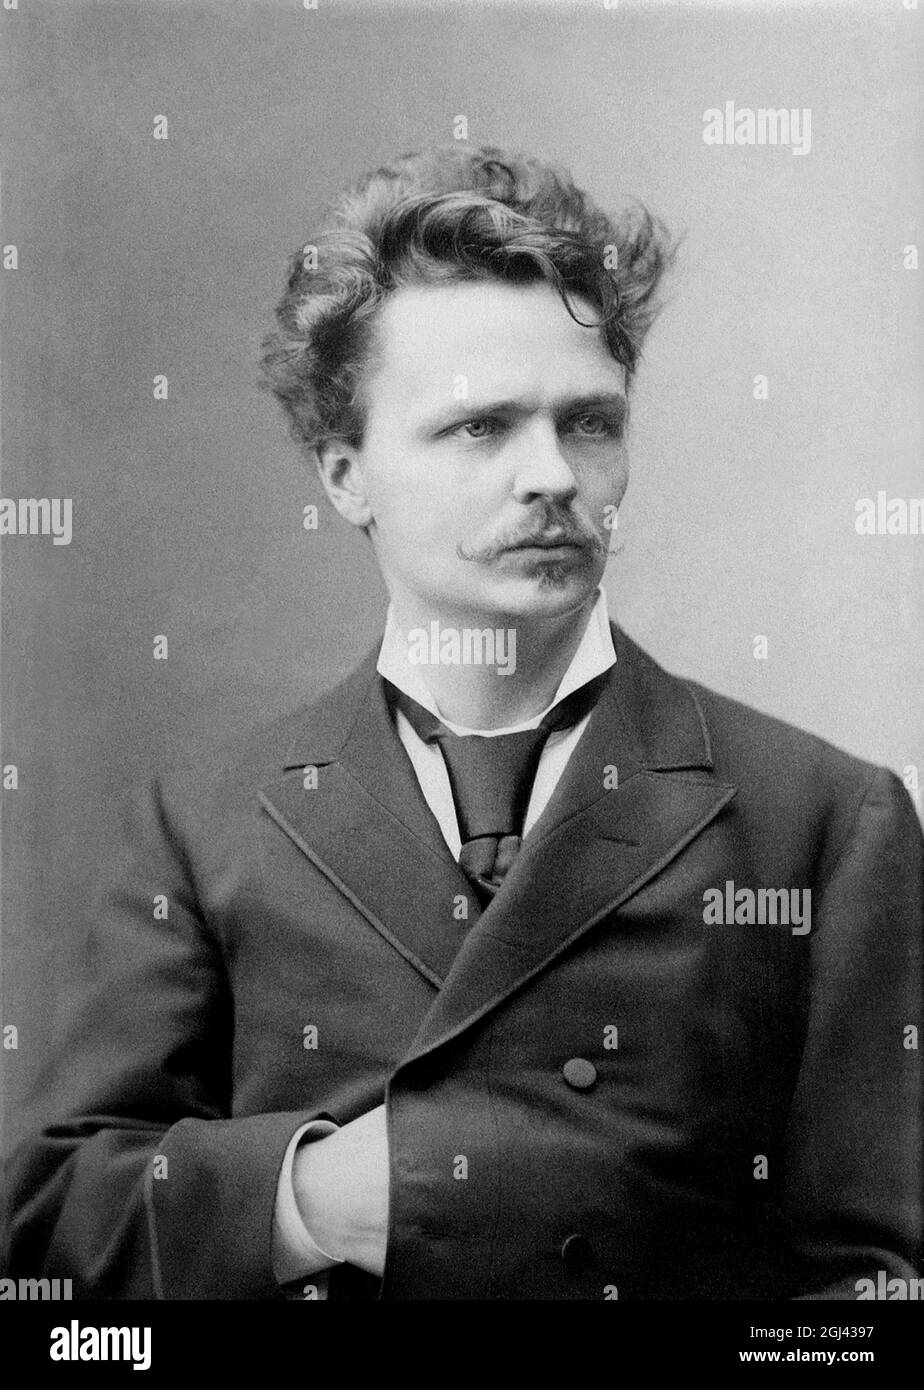 1881 , SWEDEN : The celebrated  swedish playwrigt  , poet and writer AUGUST STRINDBERG ( 1849 - 1912 ). Photo by Robert Roesler ( 1837 − 1896 ). - THEATRE - SCRITTORE - WRITER - DRAMMATURGO - TEATRO - dramatist - playwriter - drammaturgo - POESIA - POETRY - POETA - SCRITTORE - LETTERATURA - WRITER - baffi - moustache - tie - cravatta - colletto- collar --- Archivio GBB Stock Photo